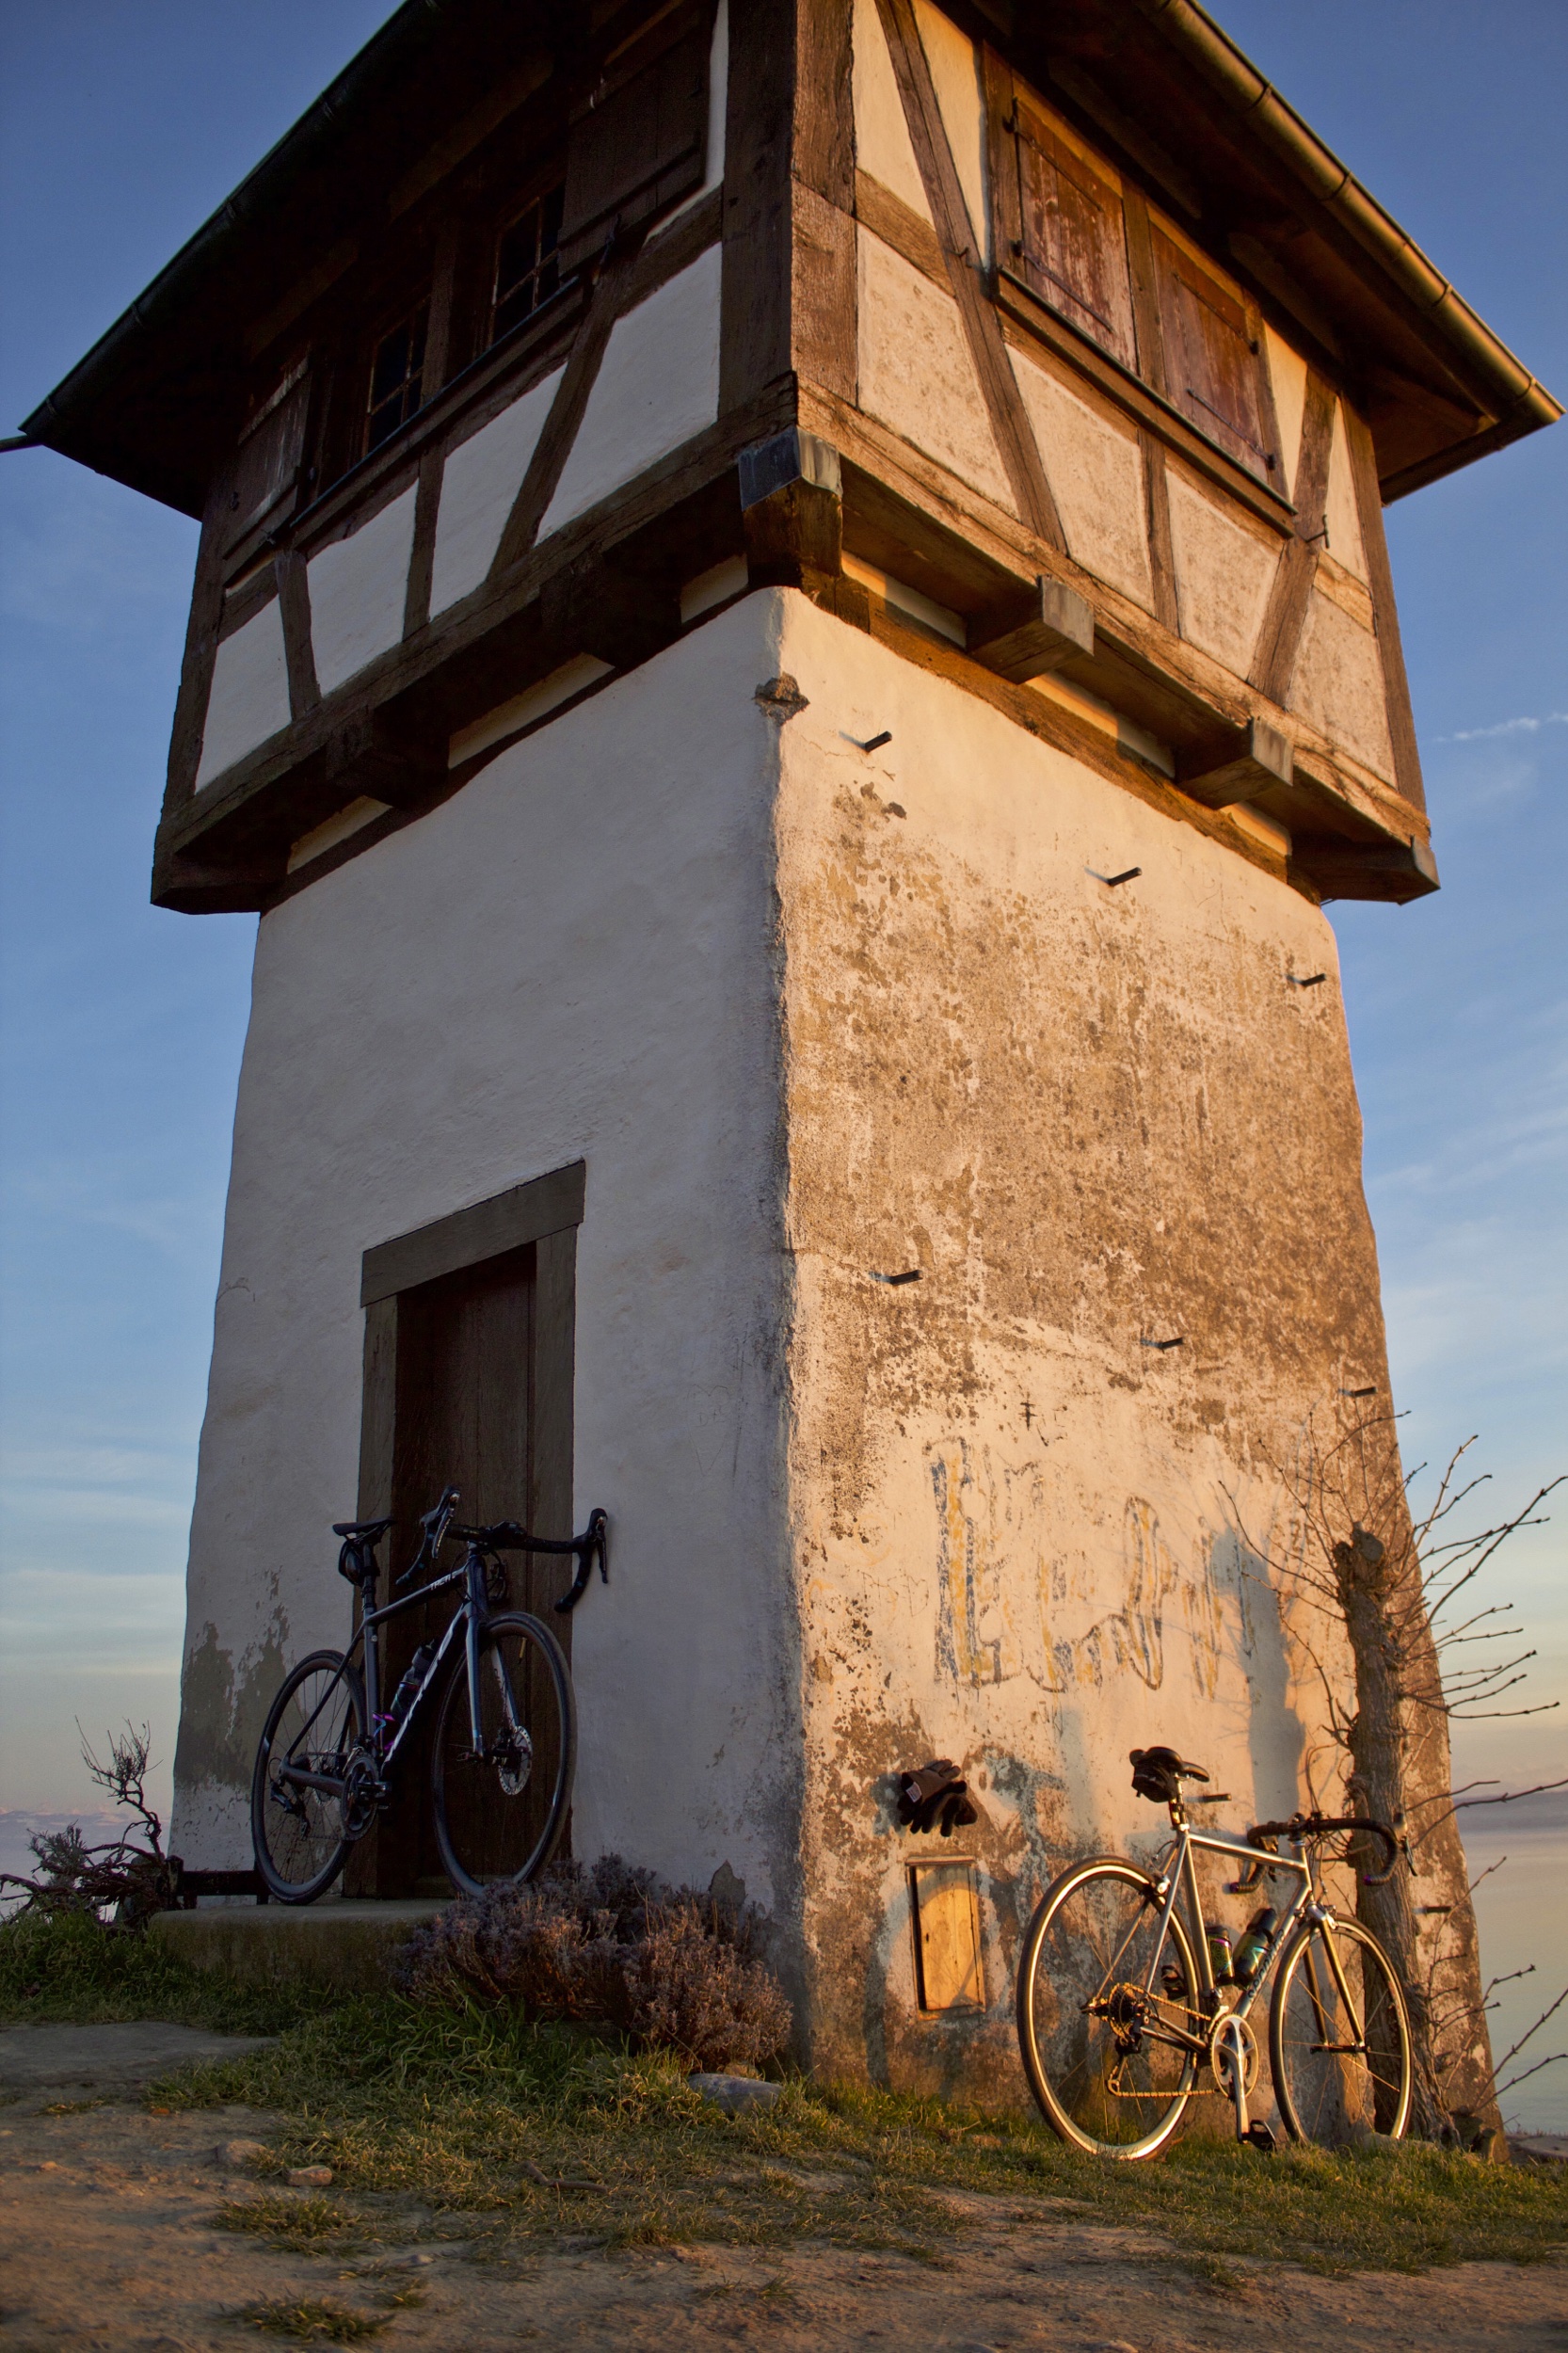 Bikes Against Tower.jpeg